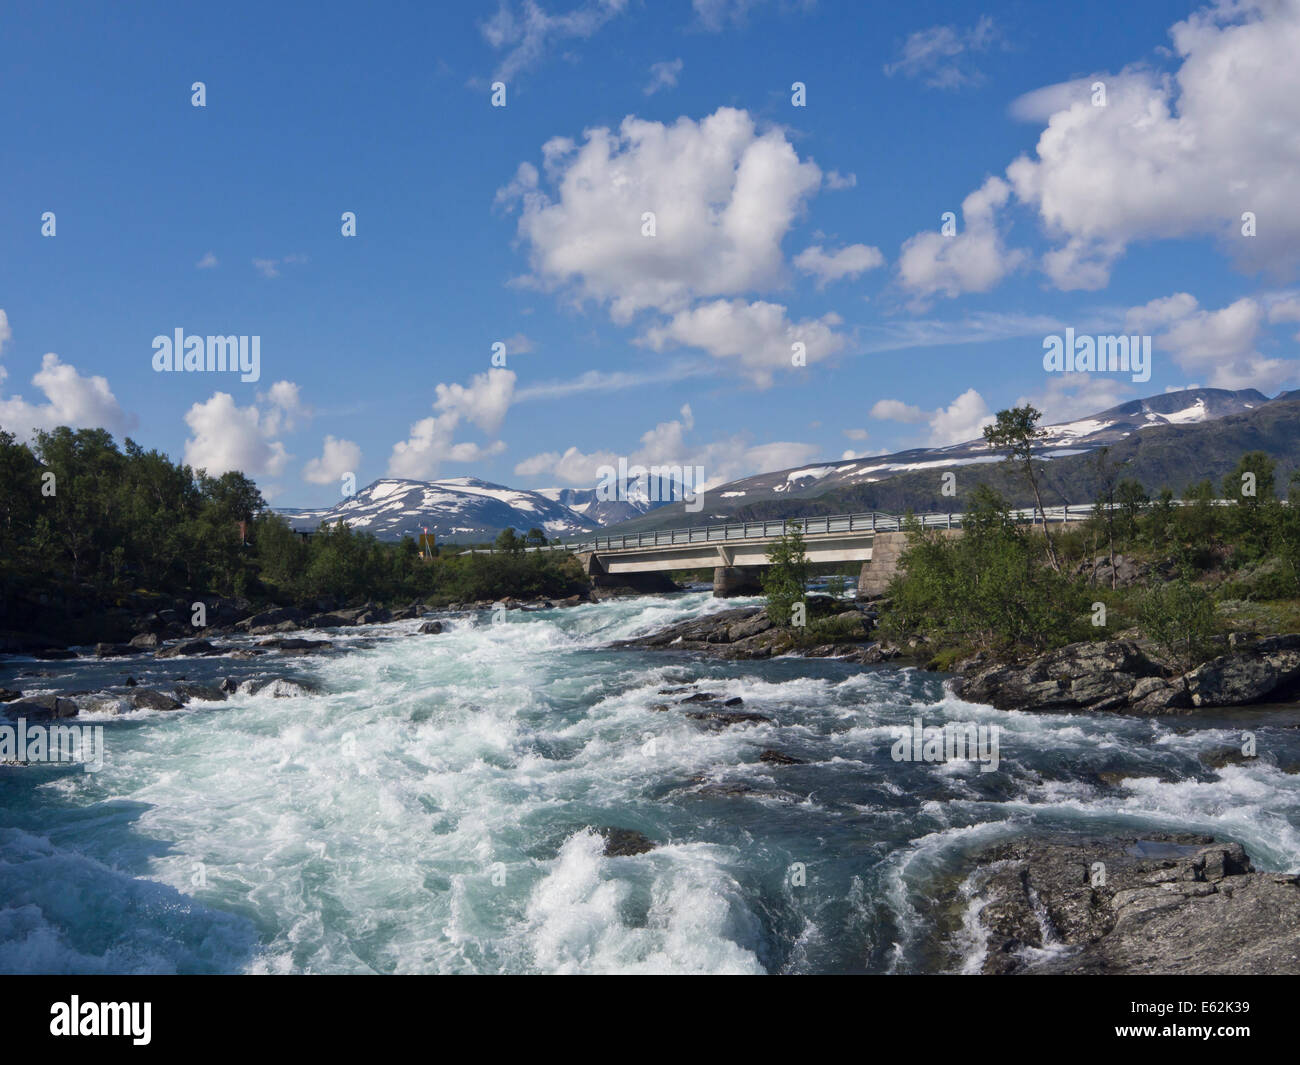 Road bridge crossing river with glacier blue , fresh water, summer mountain scene, Jotunheimen Norway Stock Photo